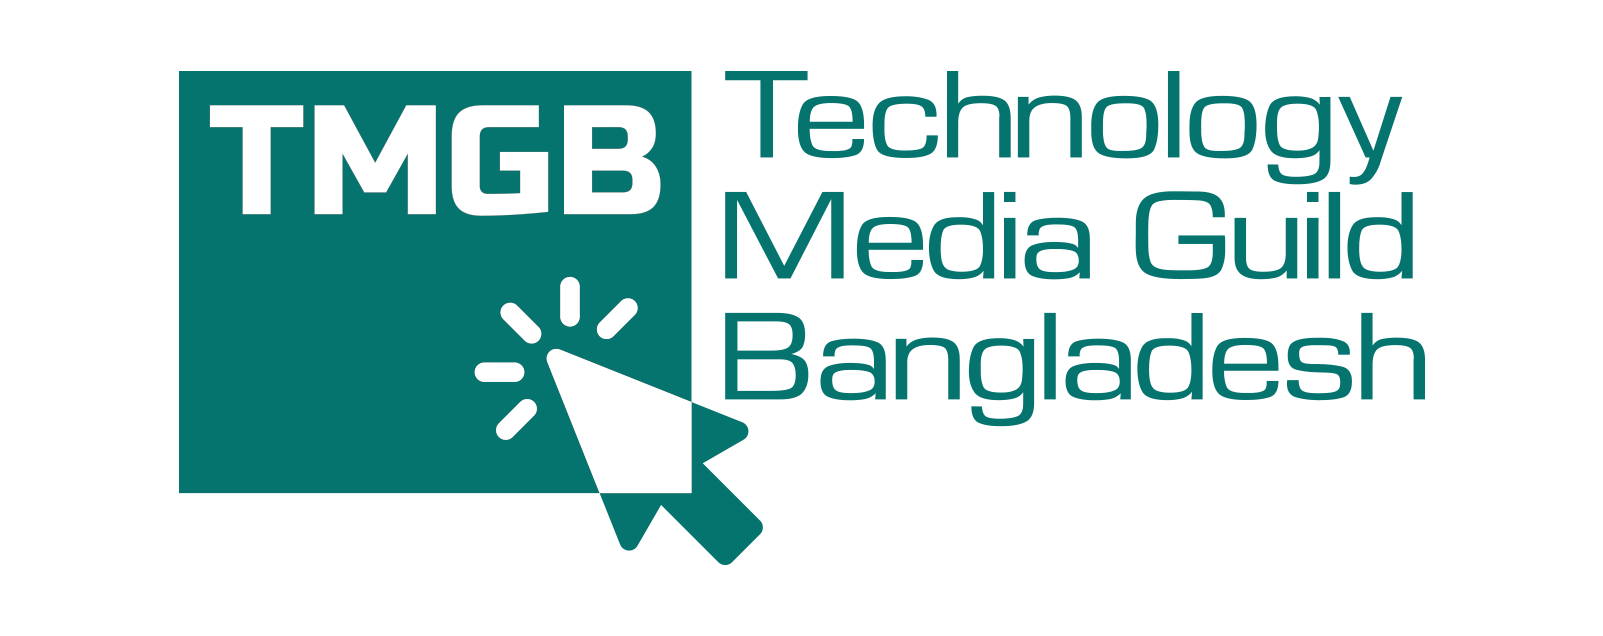 Technology Media Guild Bangladesh